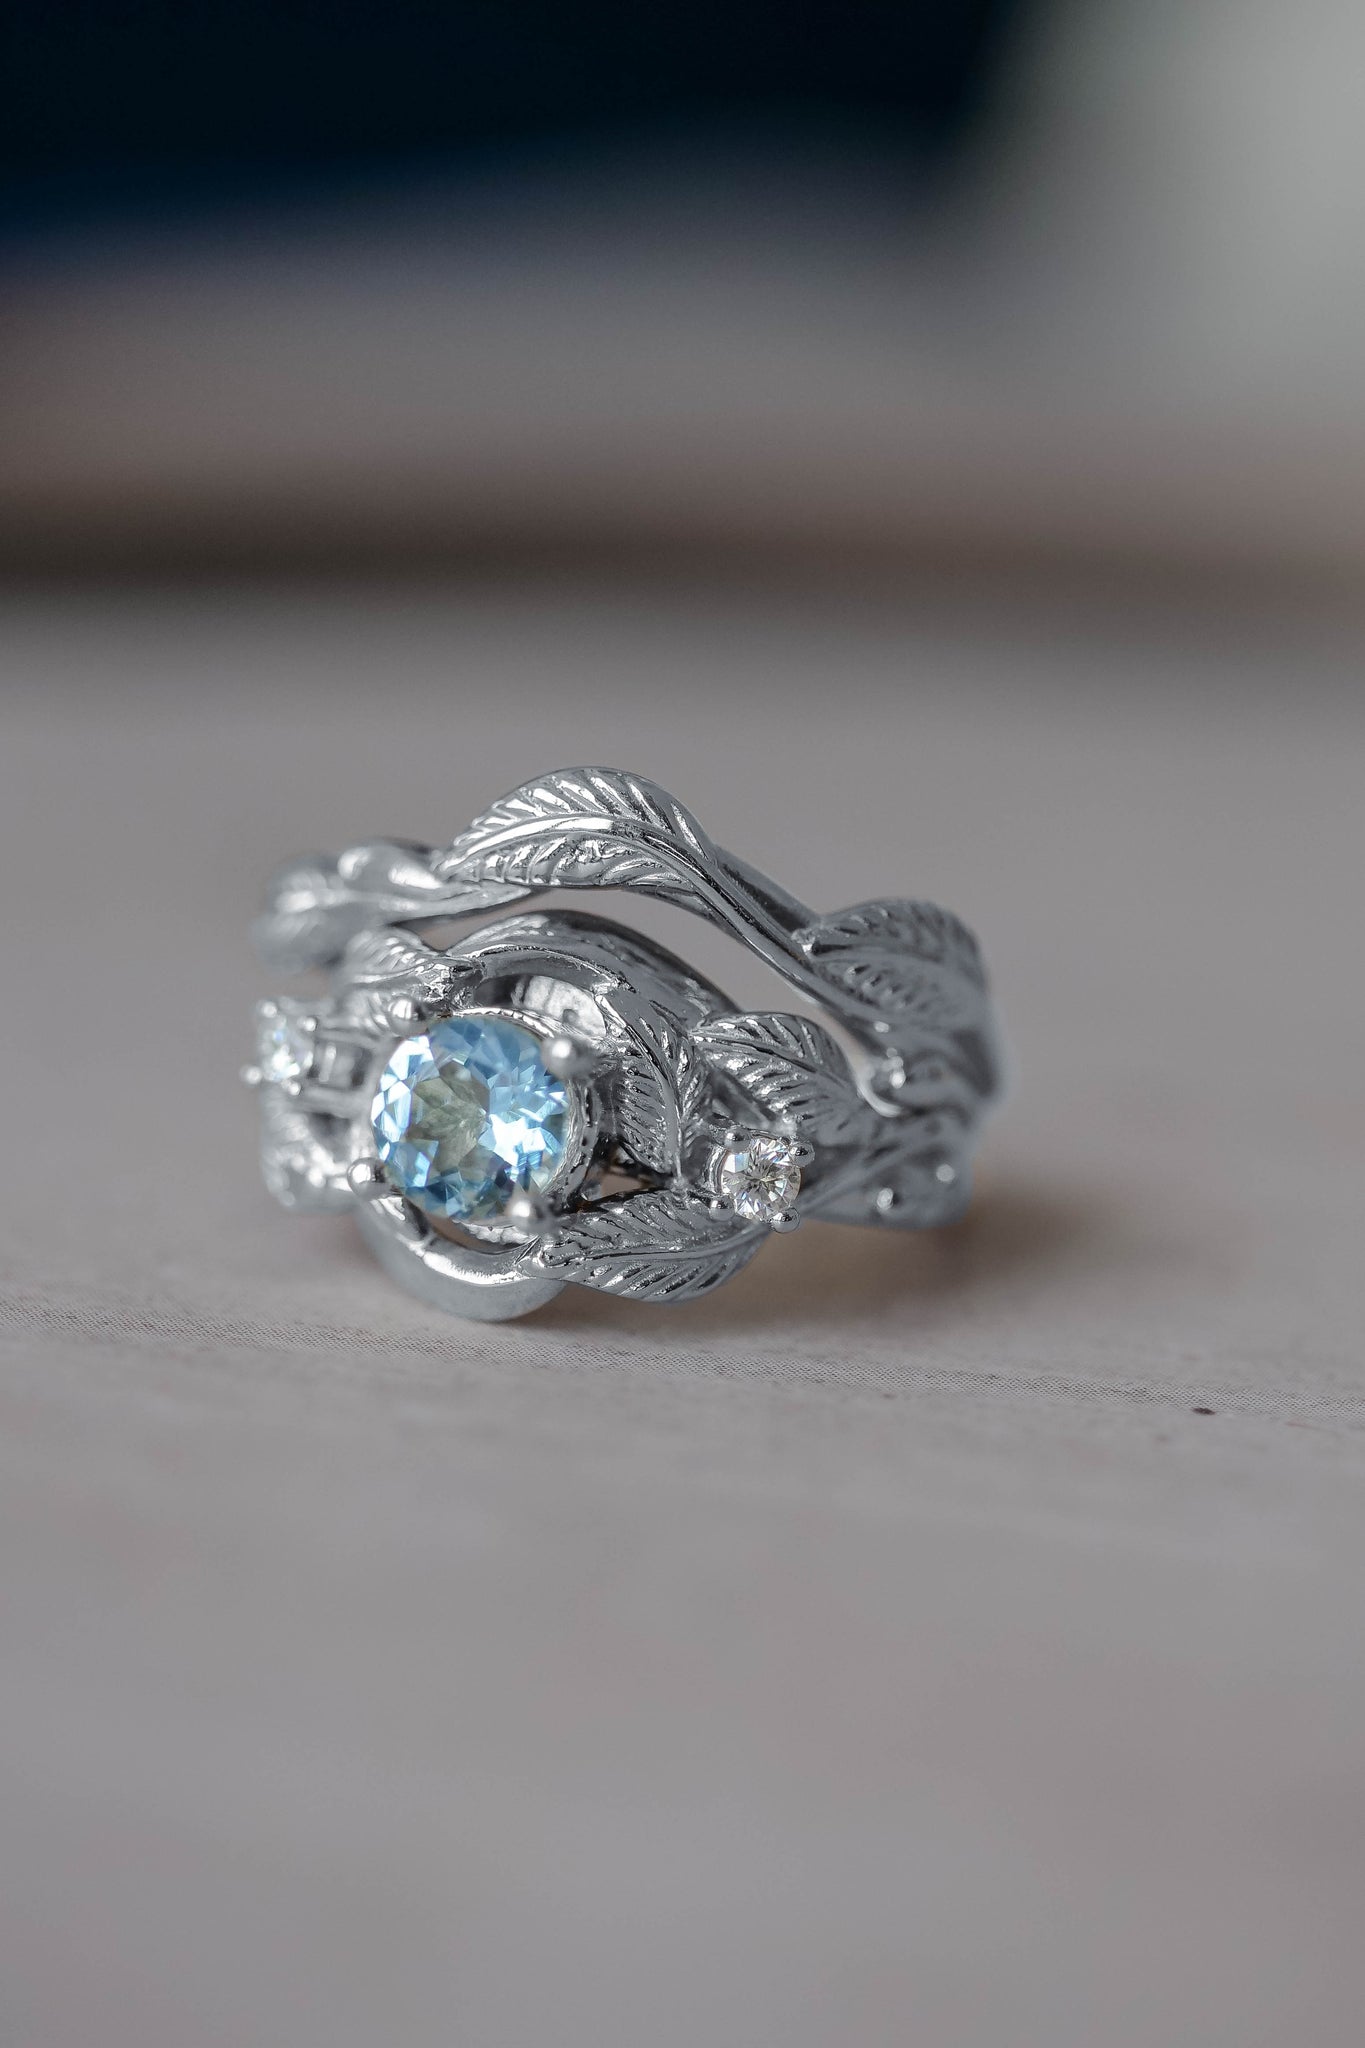 Leaves and vine bridal ring set with aquamarine / Azalea - Eden Garden Jewelry™